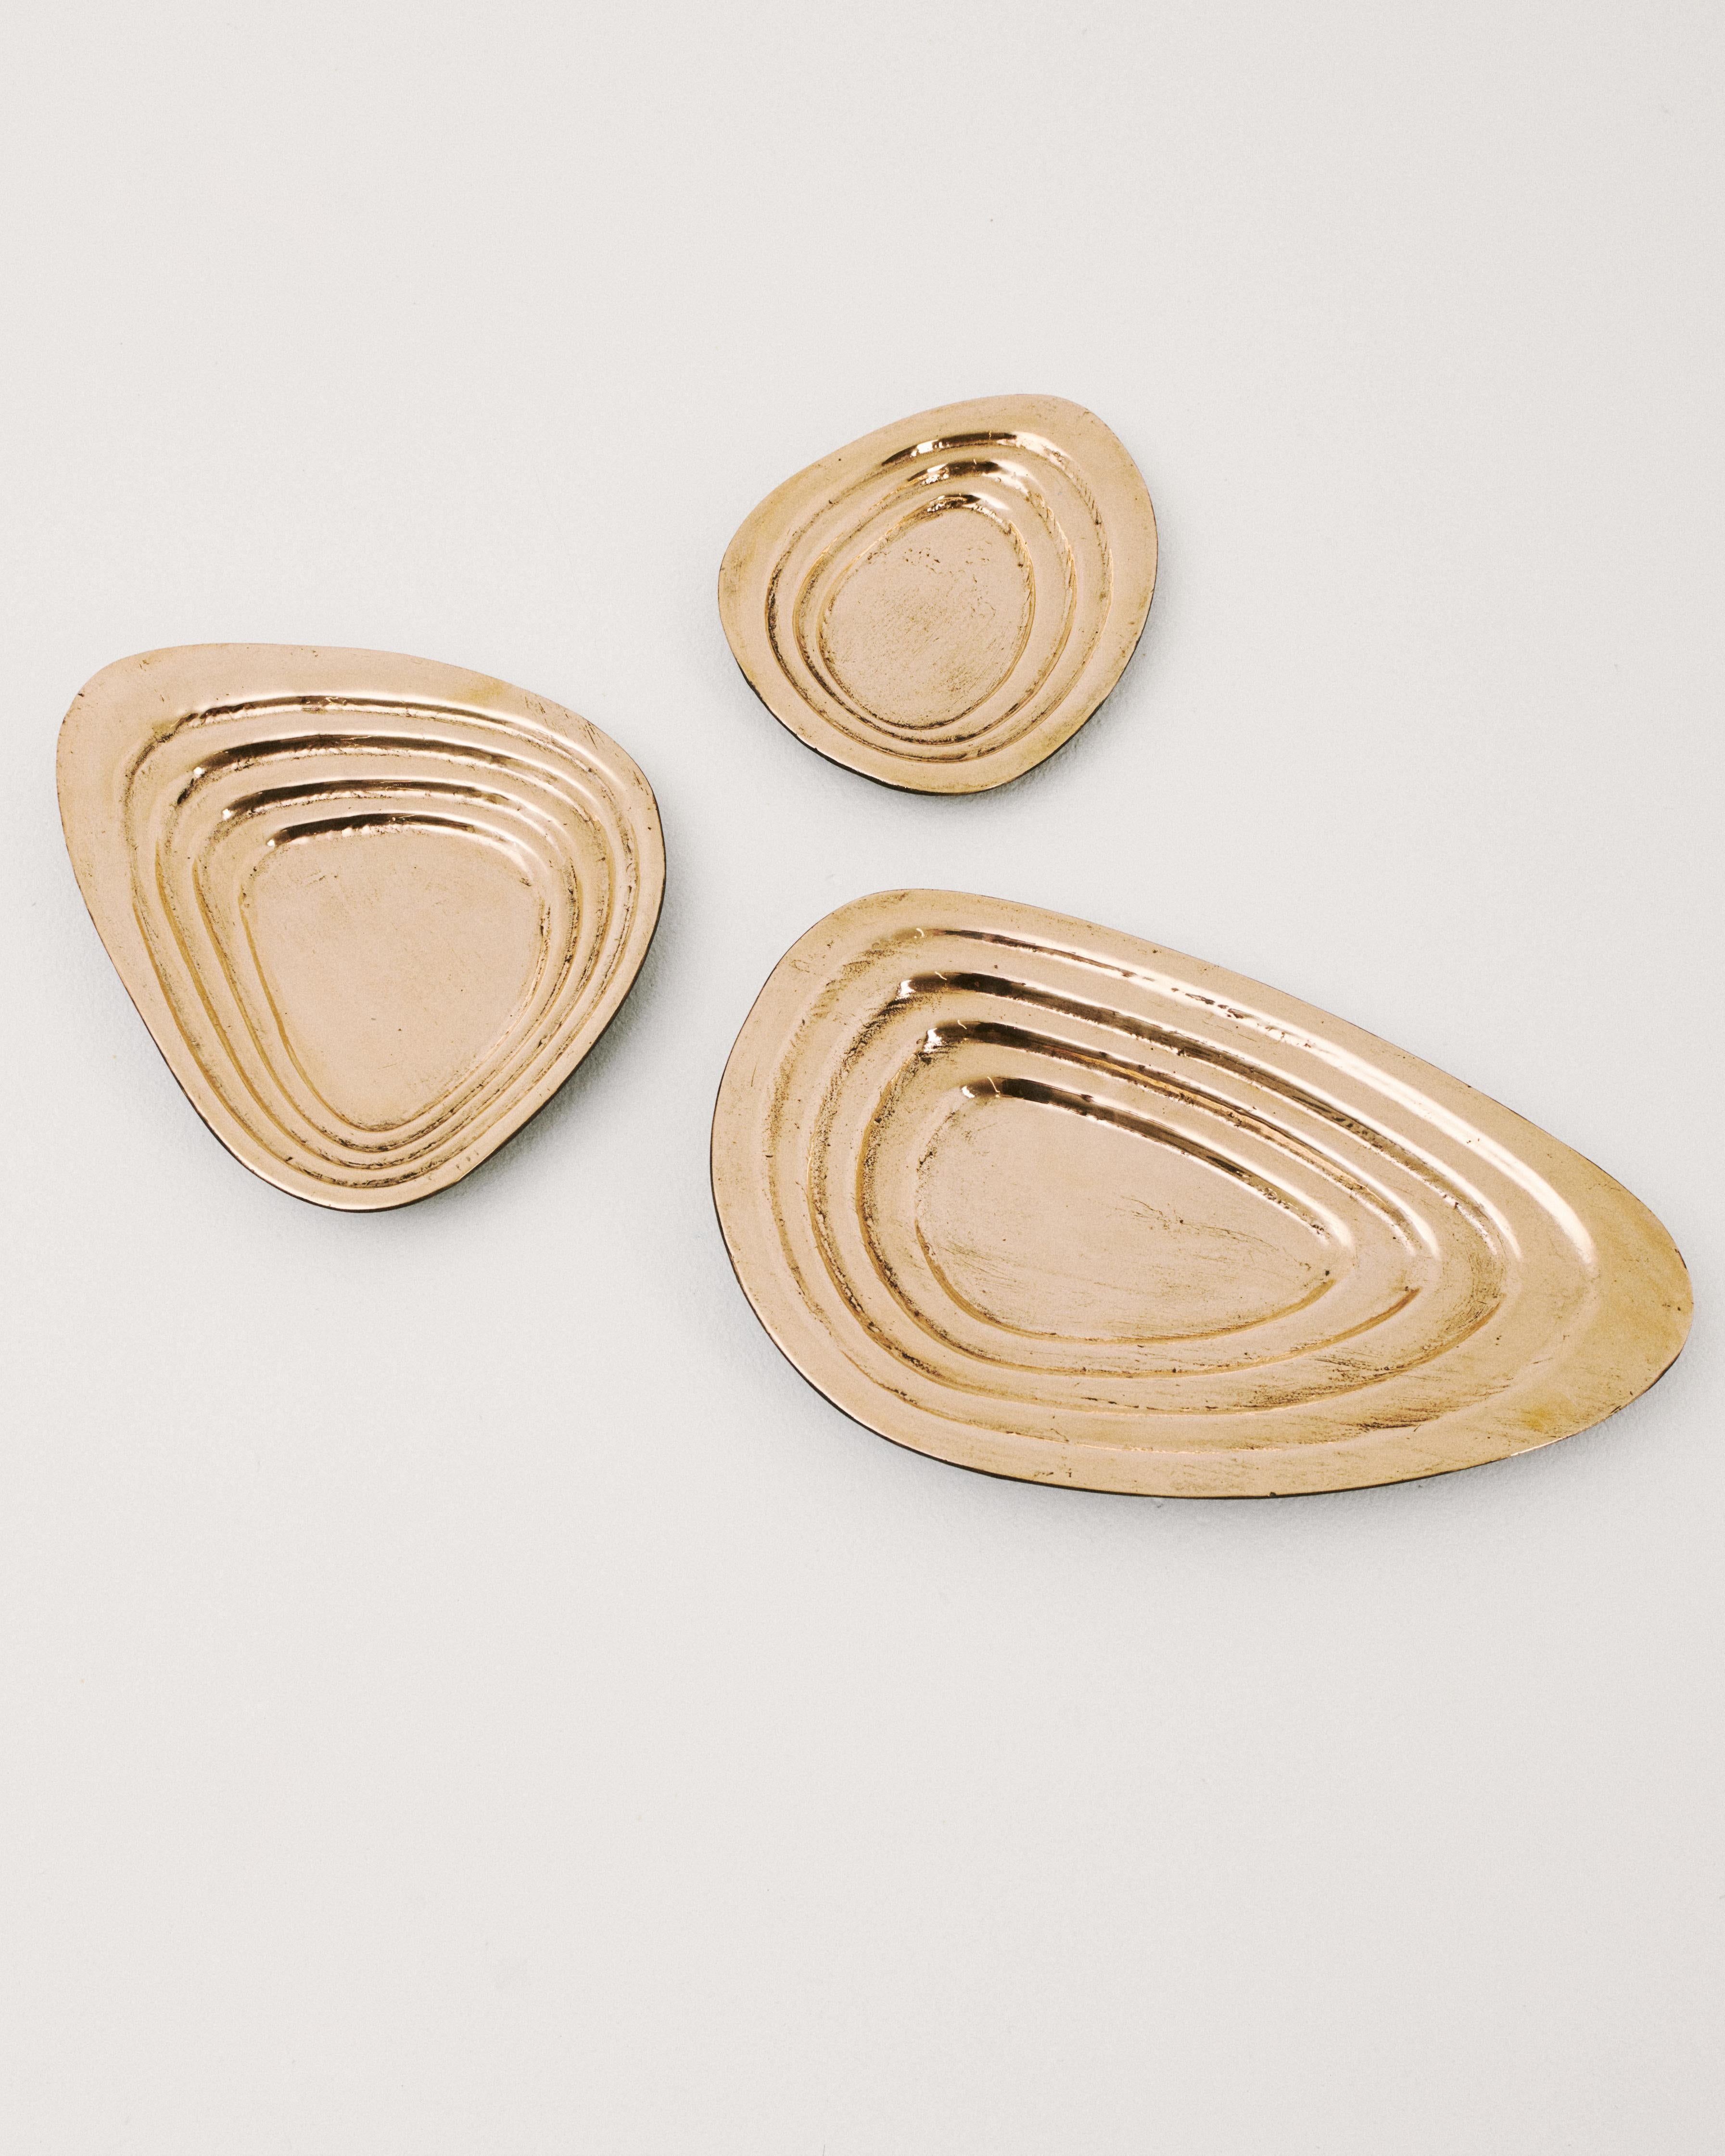 Orbite ( cast bronze trays ) - Art by Ferreri Giovanni Luca